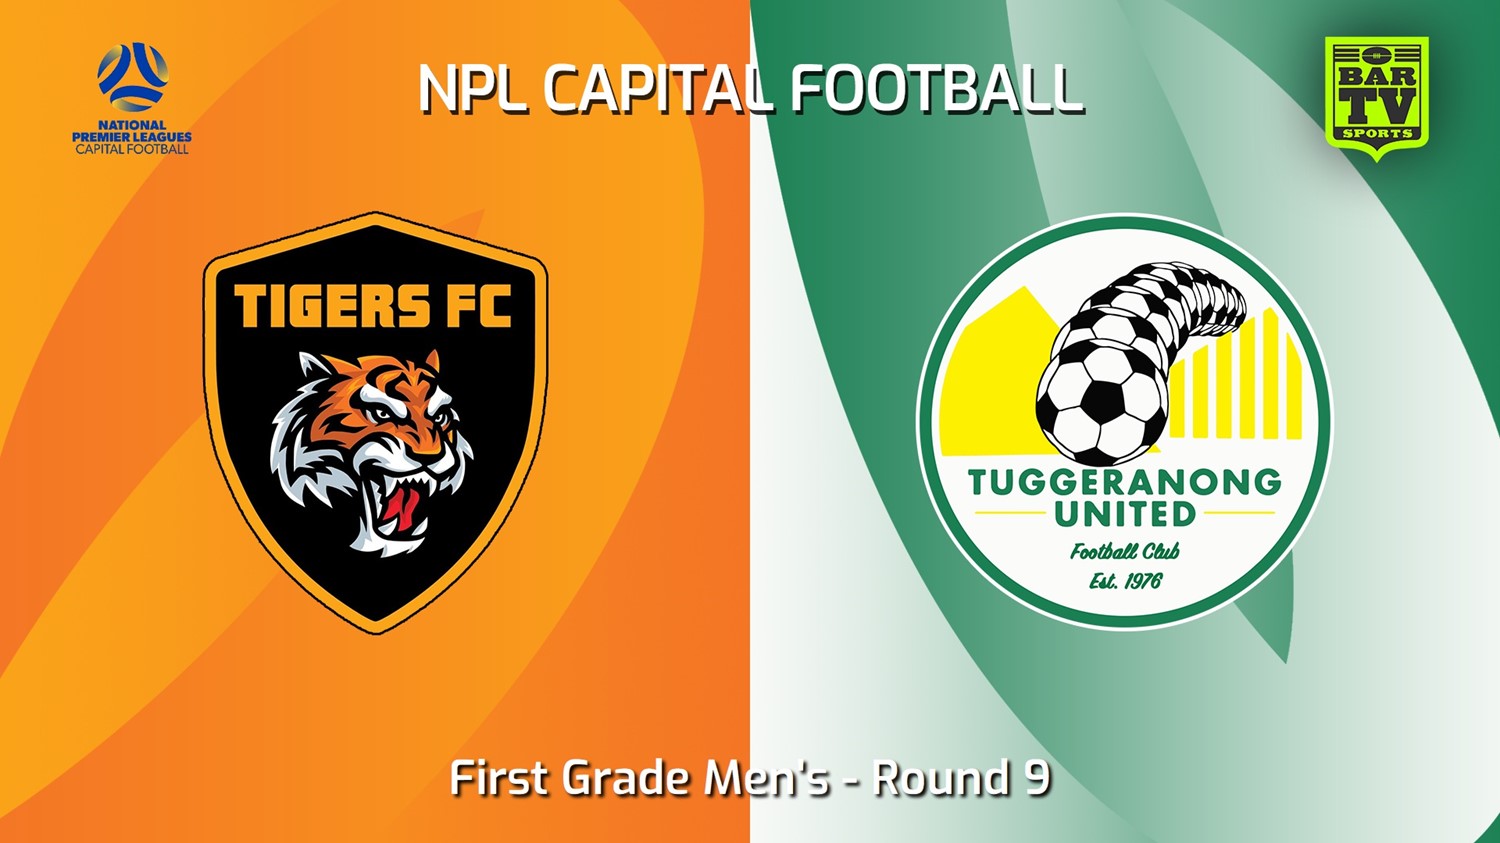 240601-video-Capital NPL Round 9 - Tigers FC v Tuggeranong United Minigame Slate Image